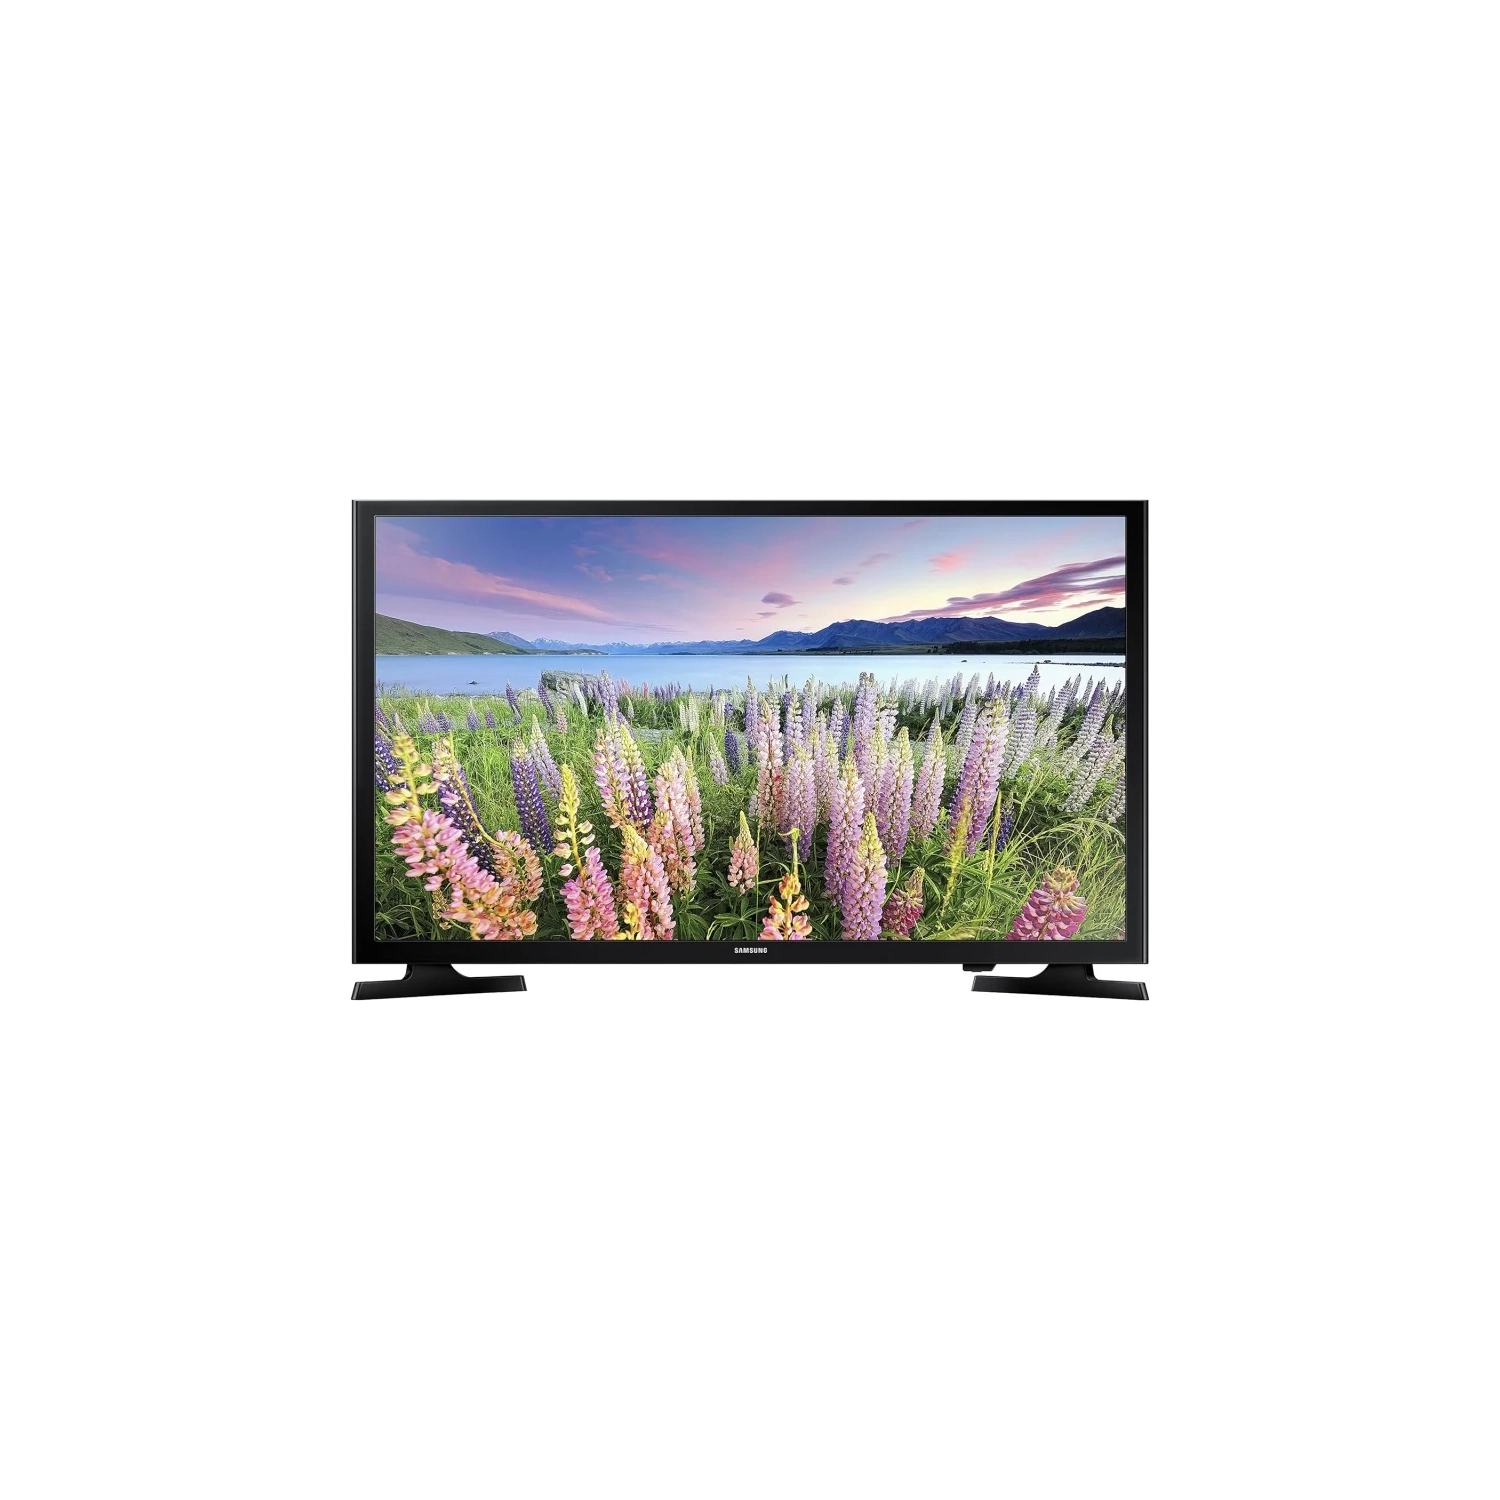 Samsung 40-Inch 1080p LED Smart TV - Black (UN40N5200AFXZC) [Canada Version]